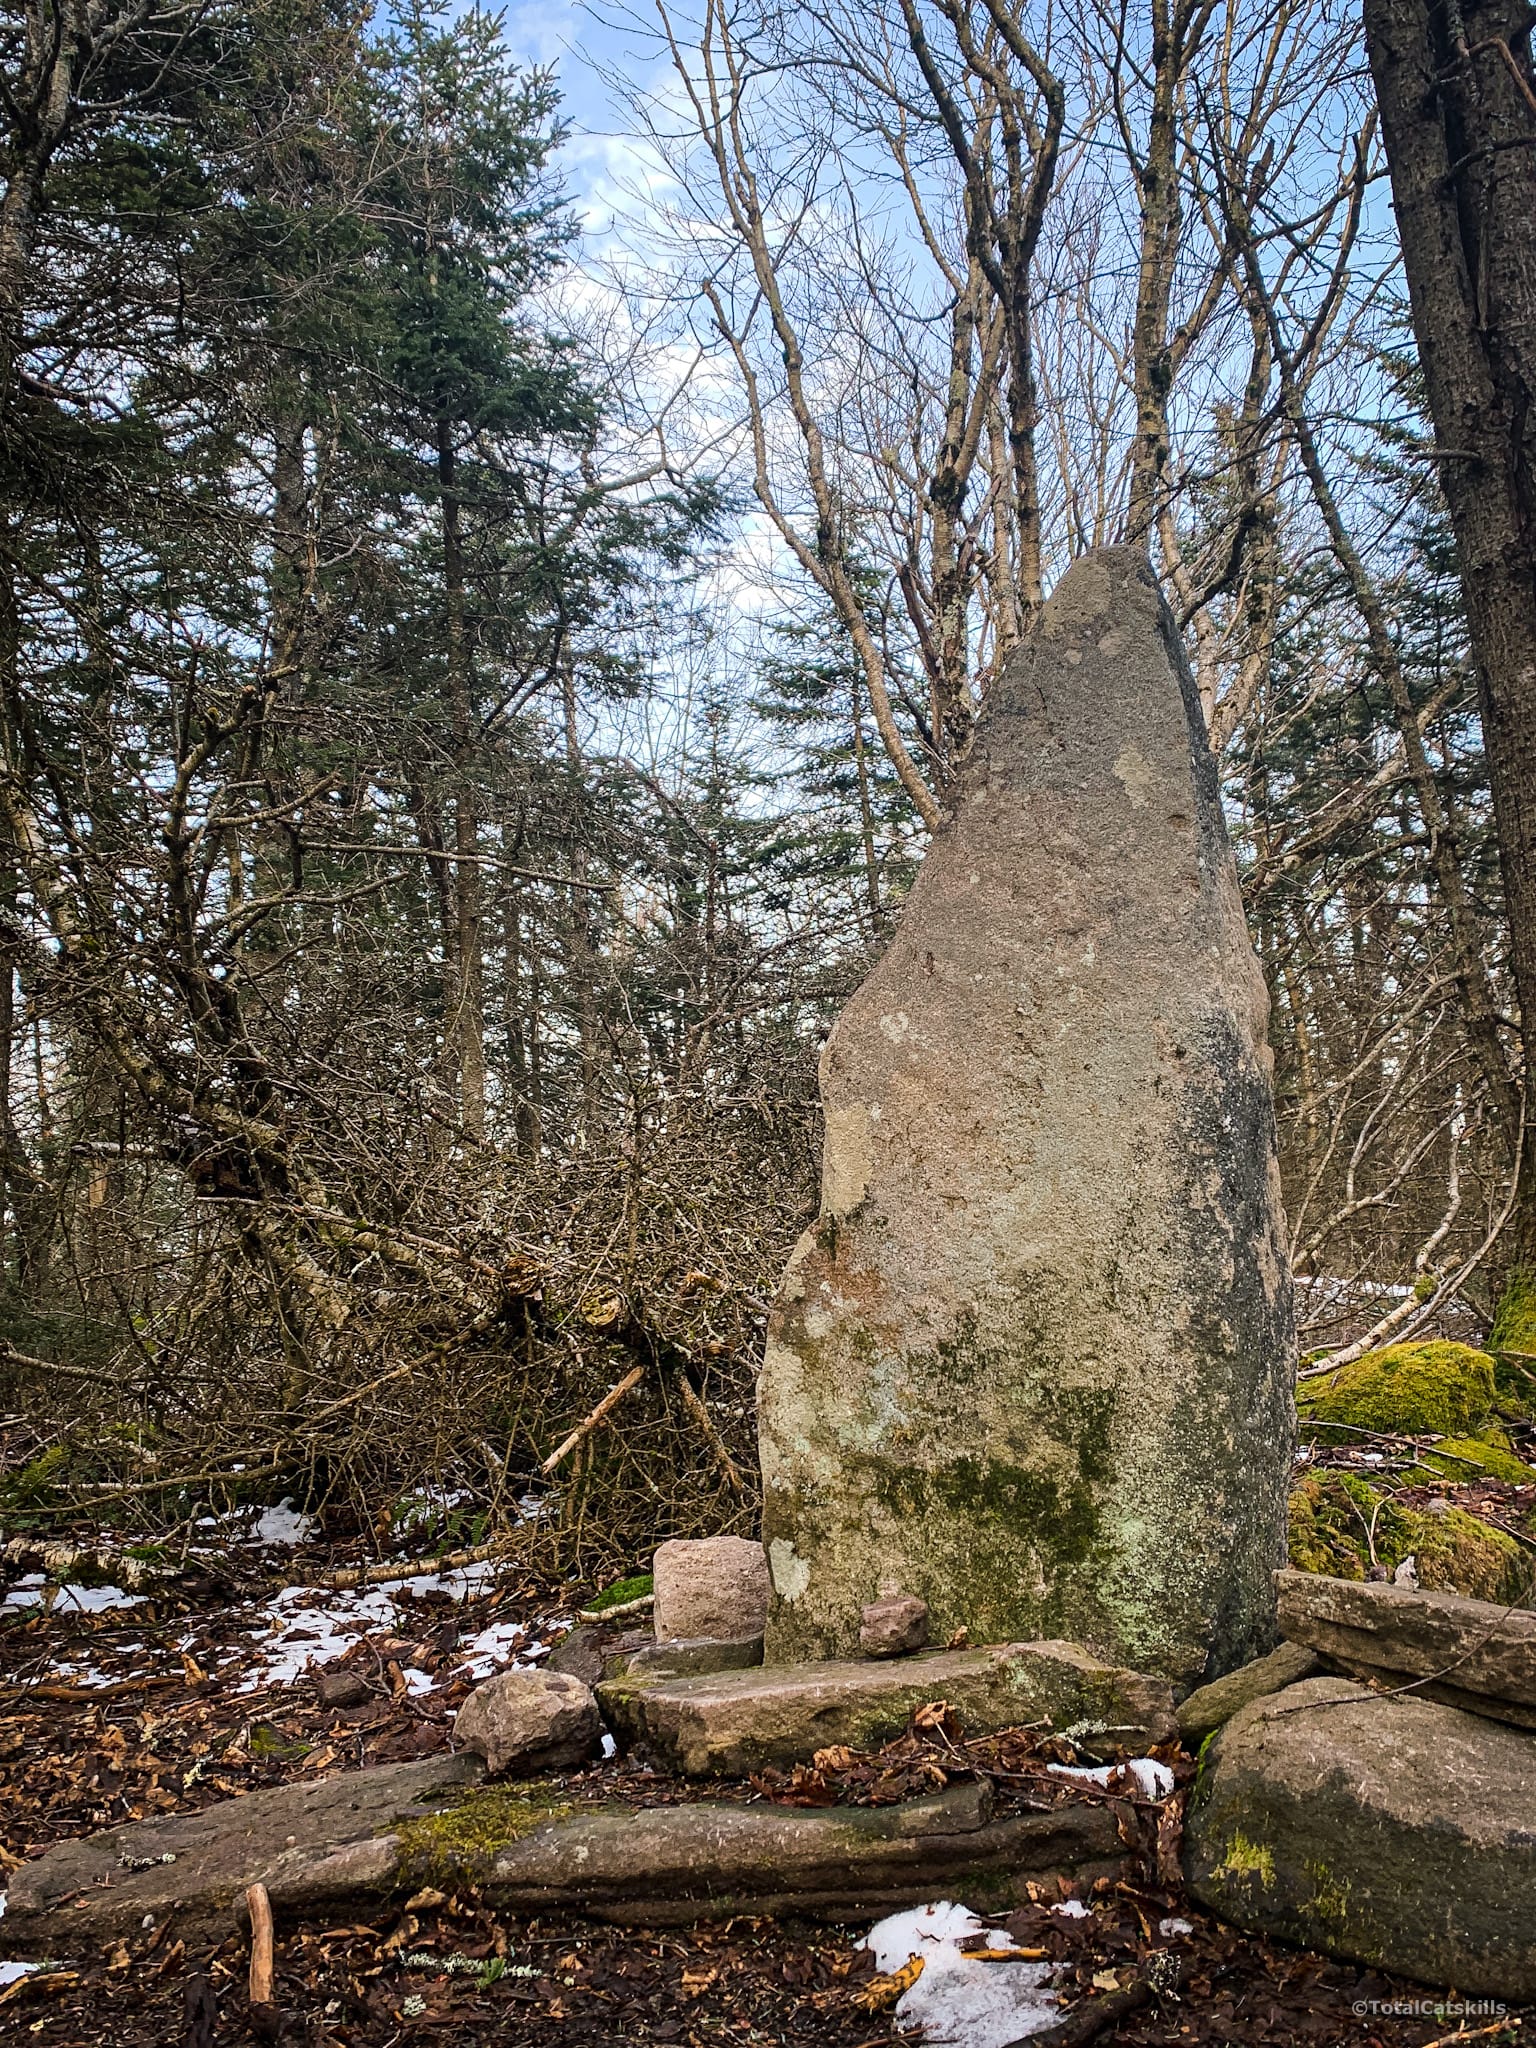 Summit marker / stone